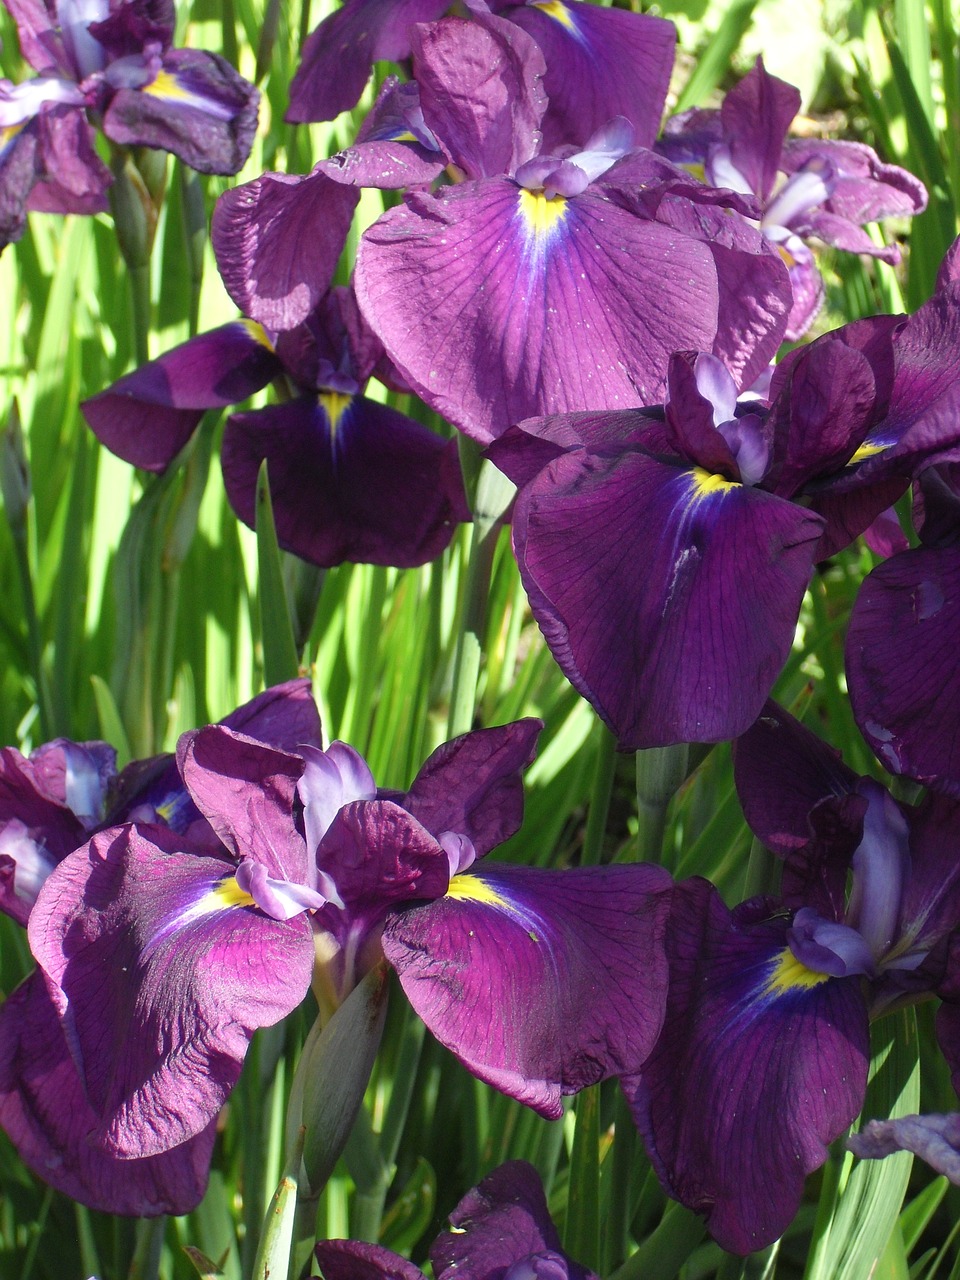 Purple,flower,iris,botanical,free pictures - free image from needpix.com